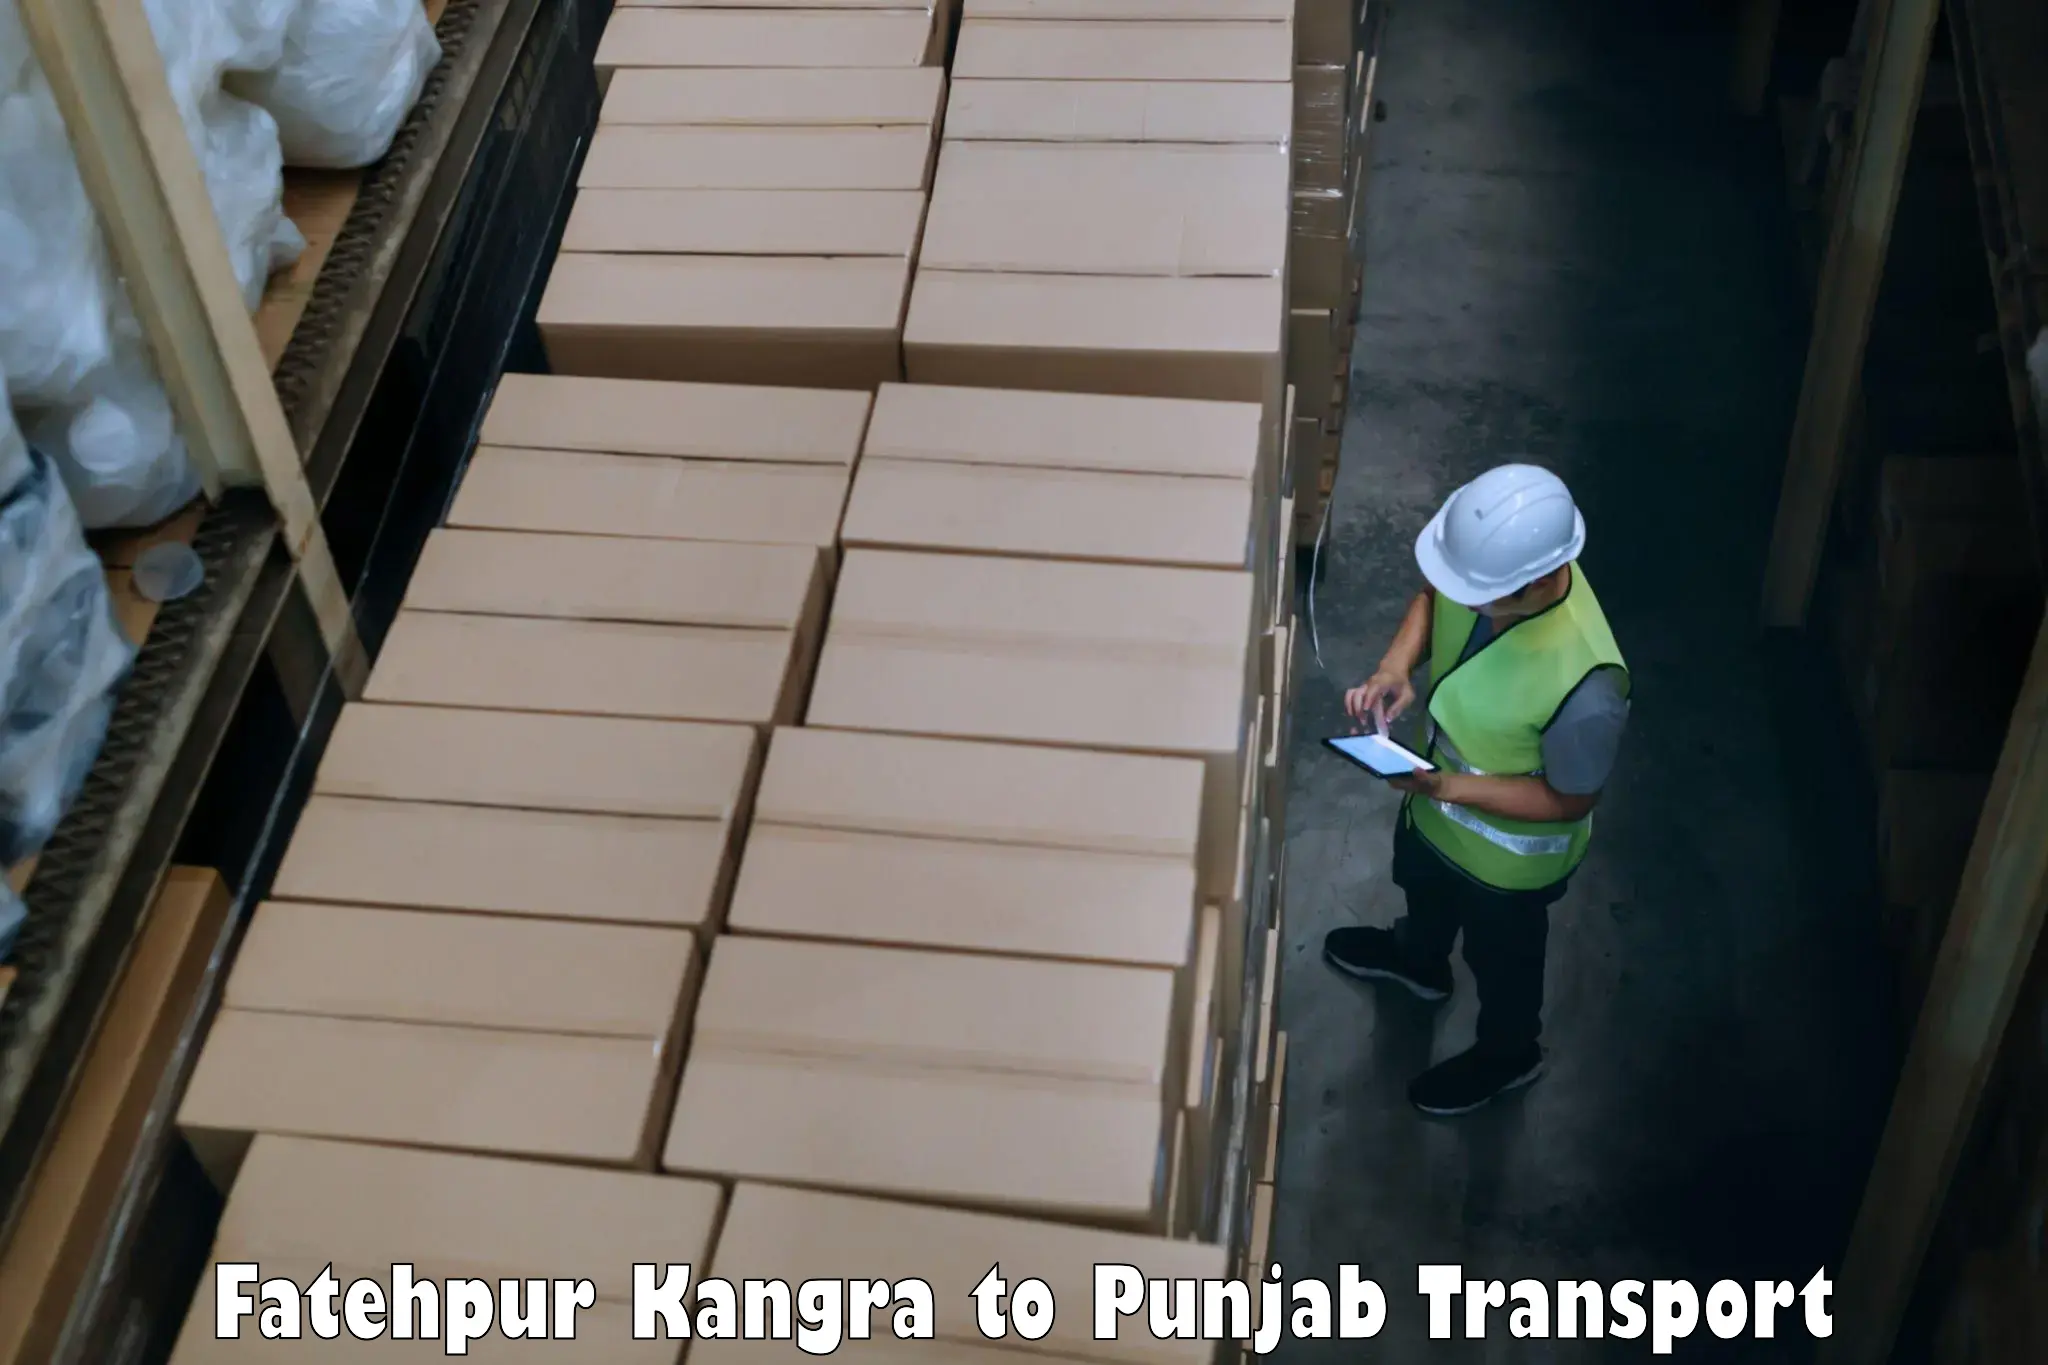 Pick up transport service Fatehpur Kangra to Patiala